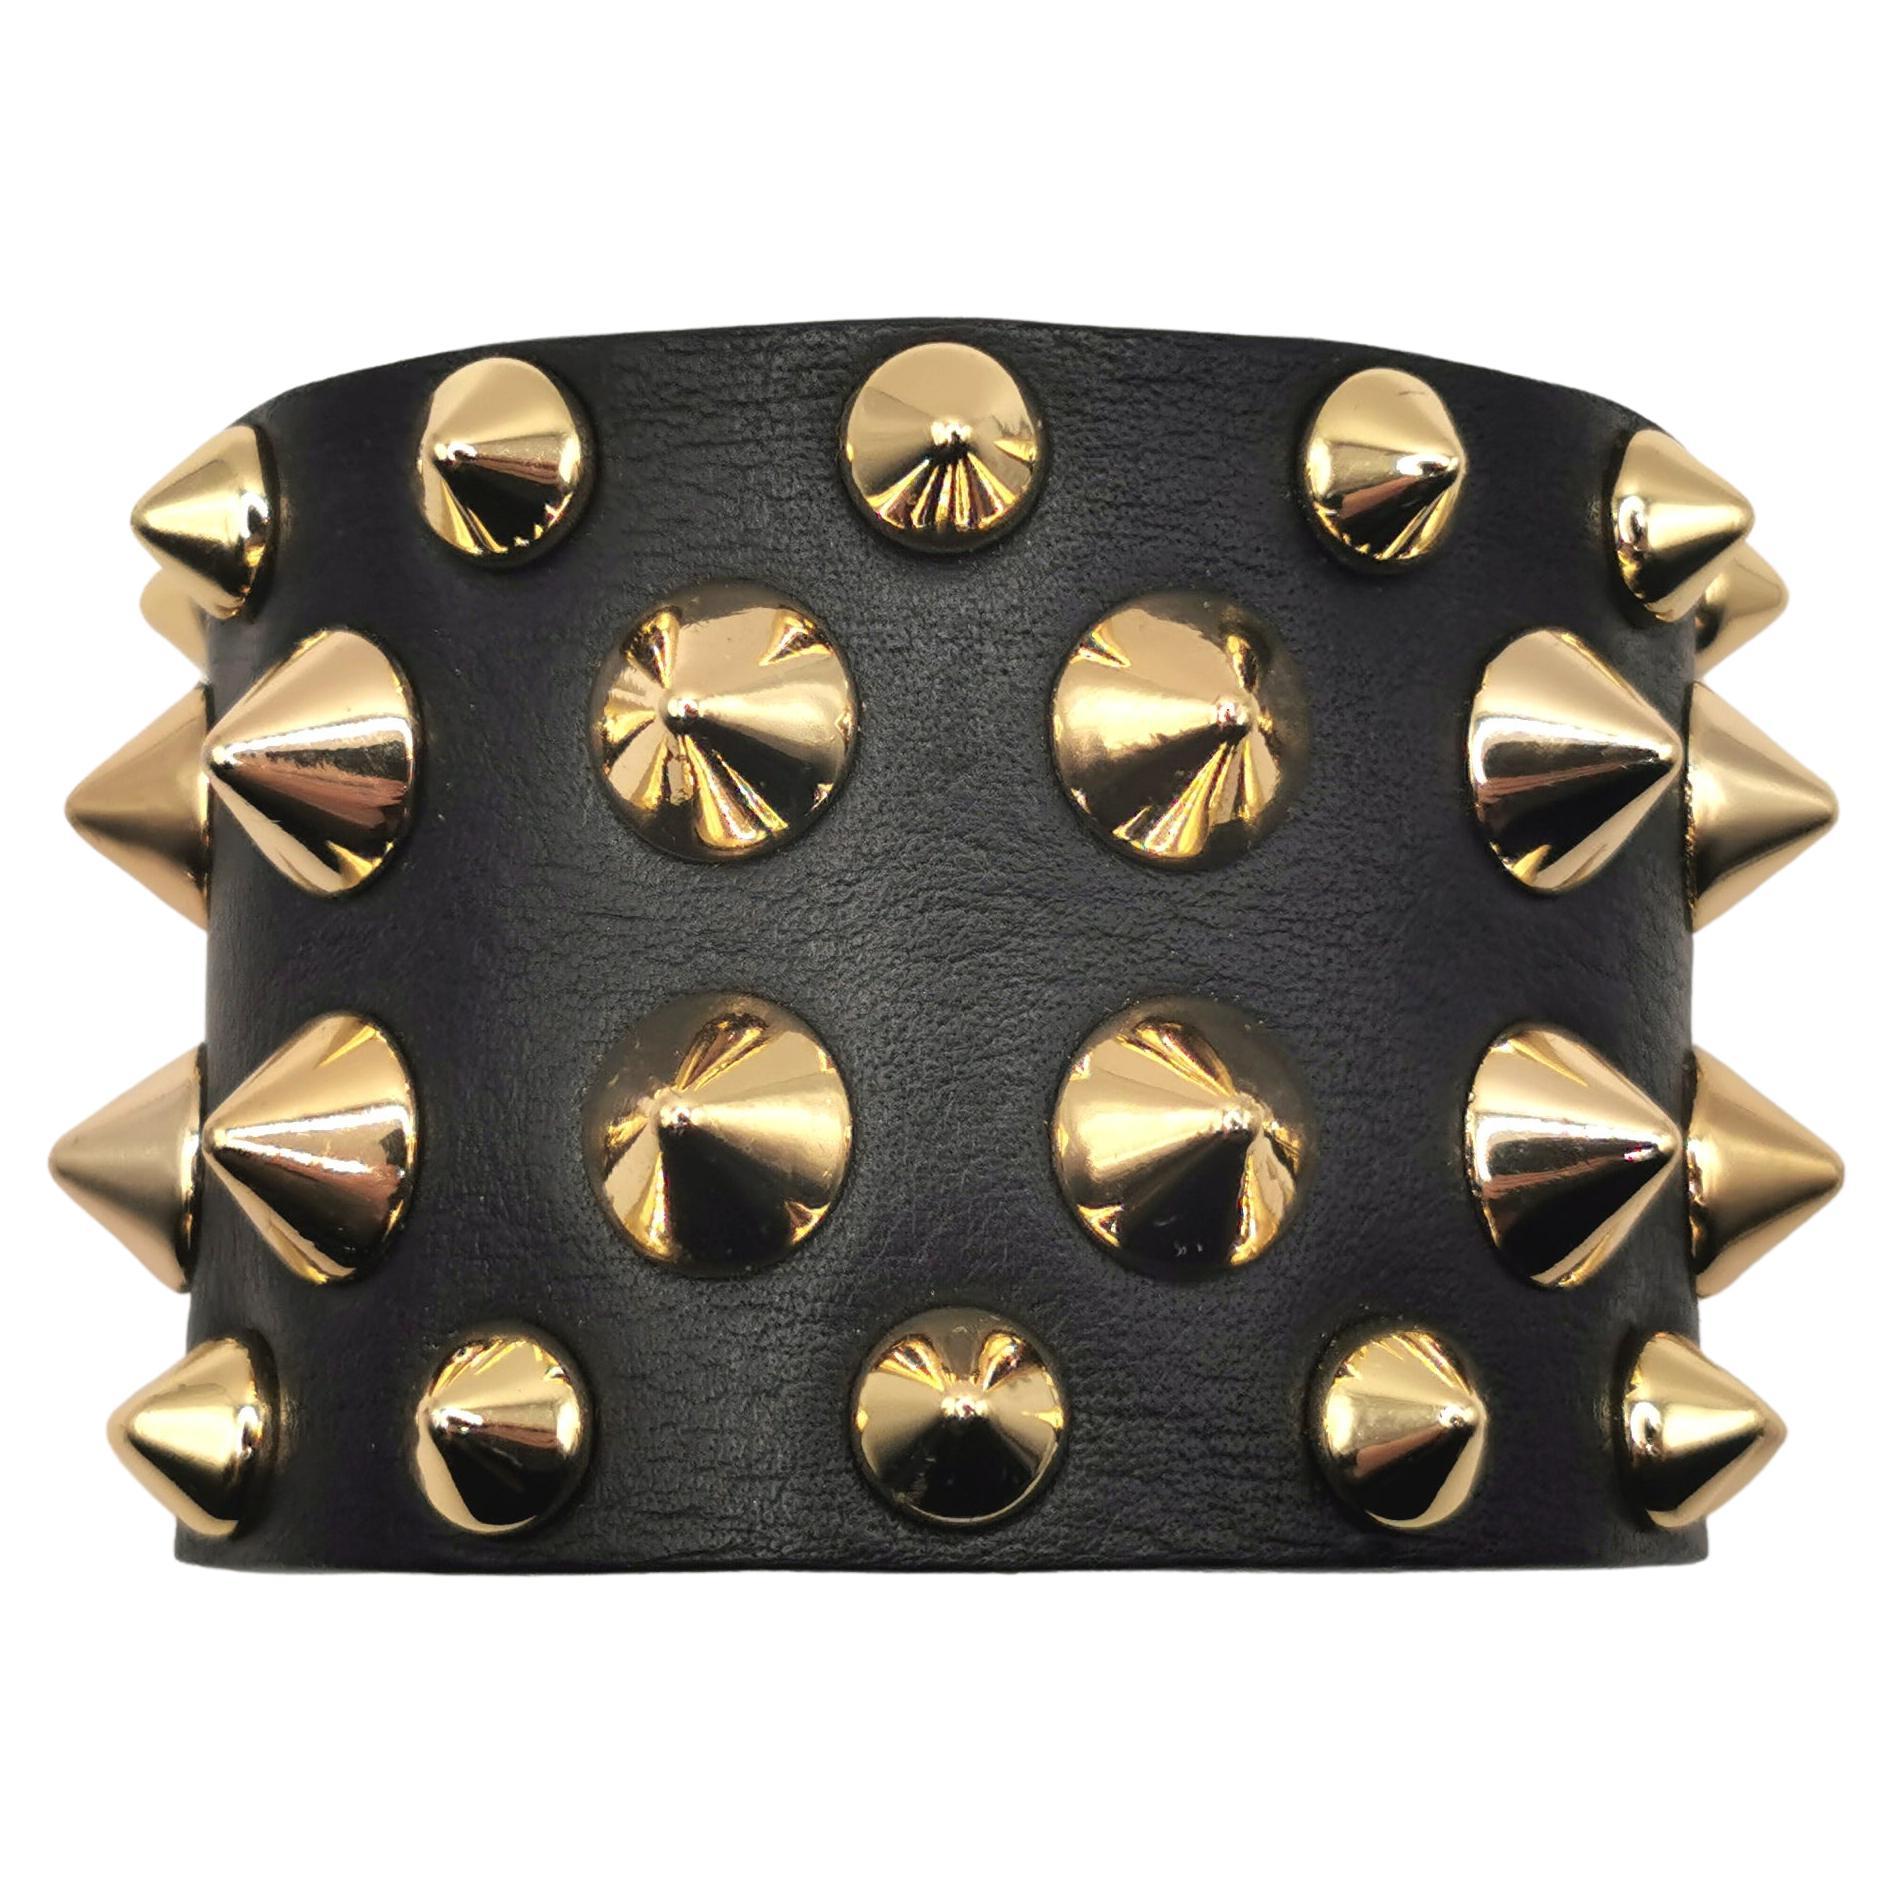 Balmain studded leather cuff bracelet, black and gold 